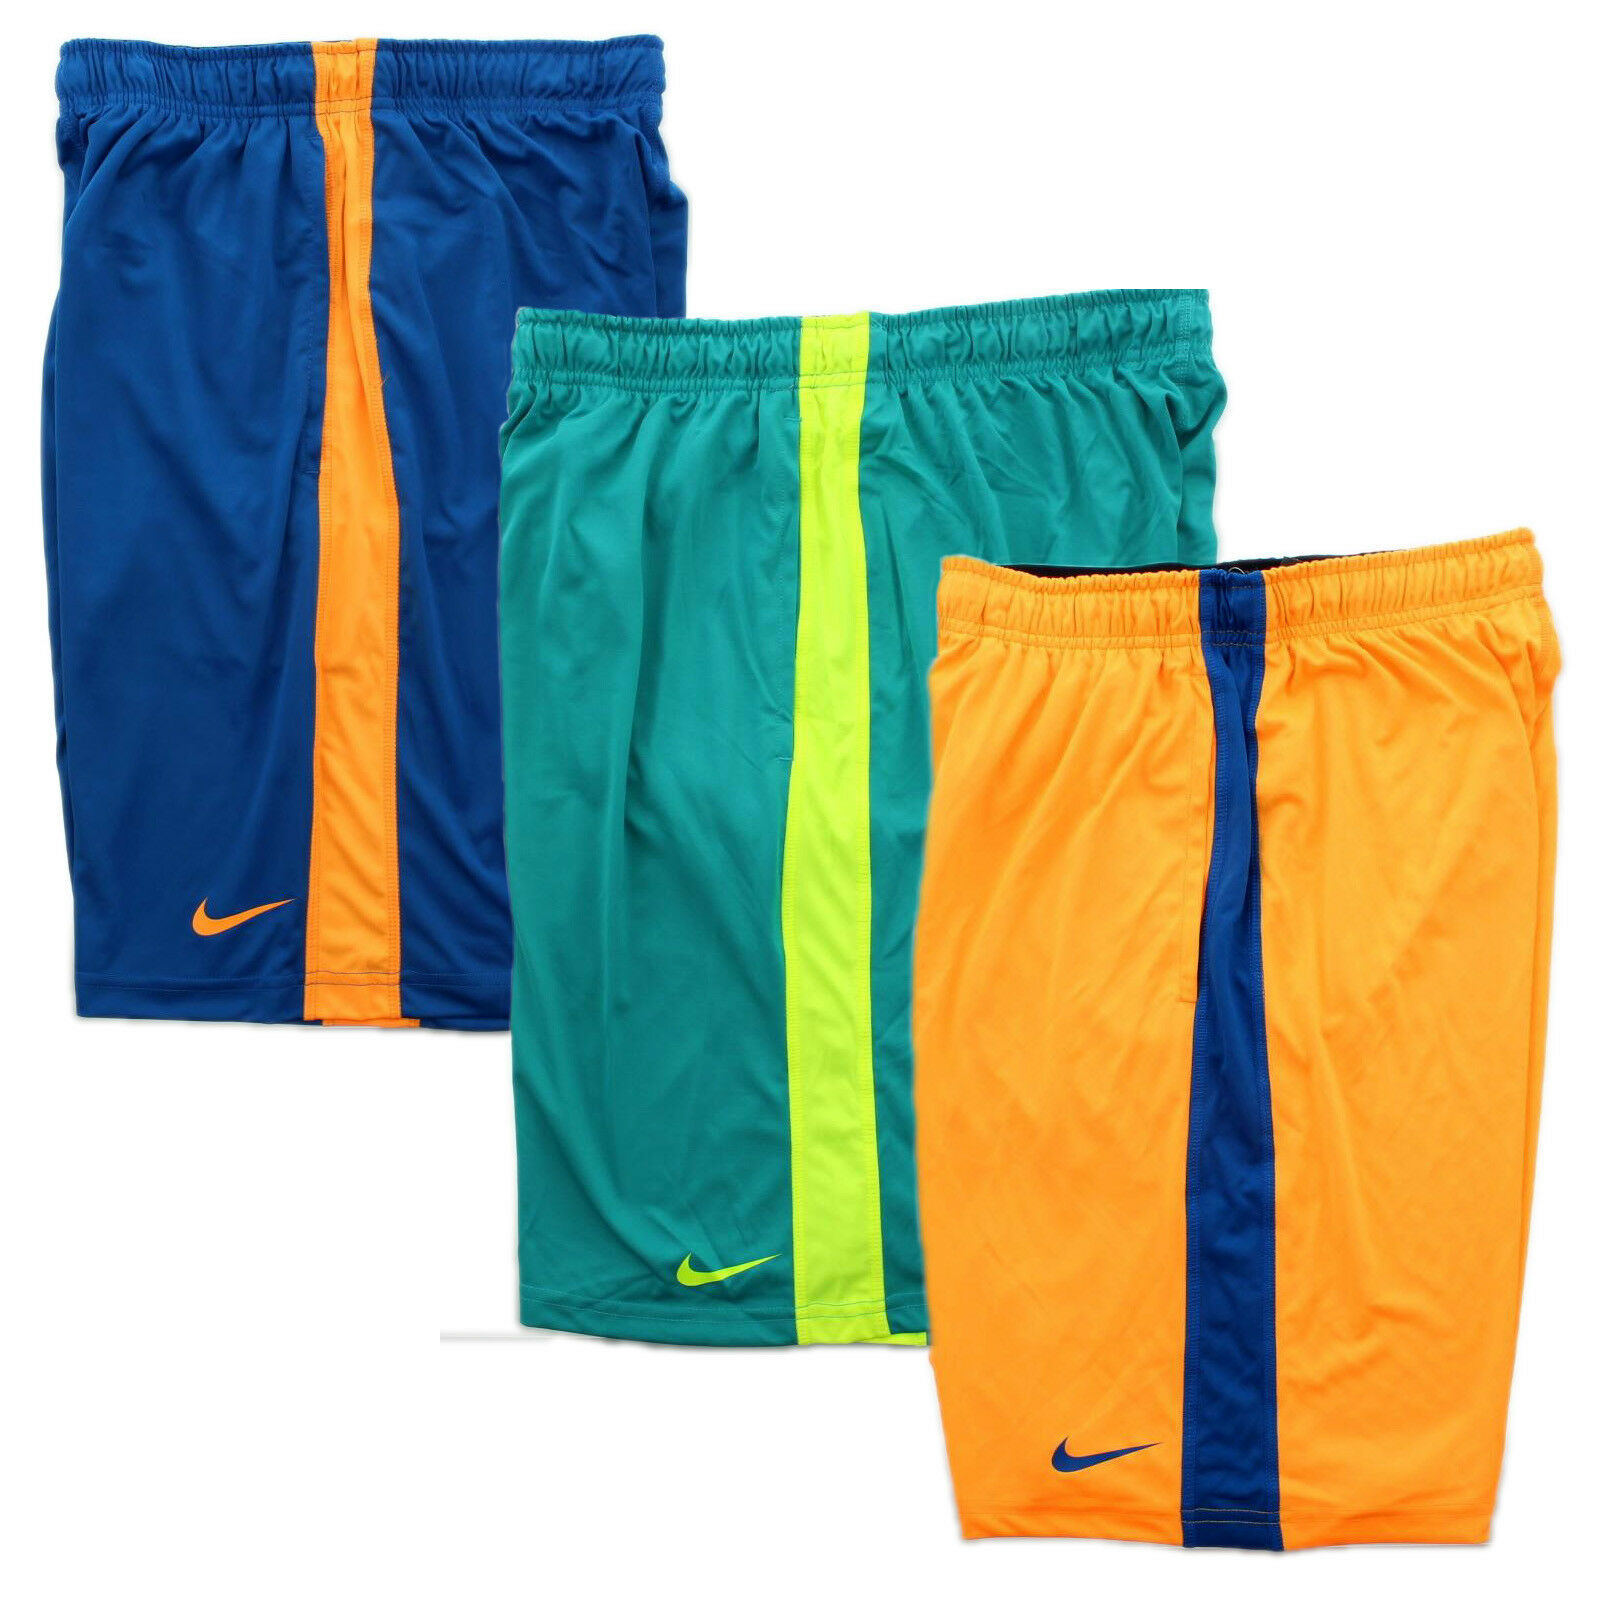 Nike 519501 Fly 2.0 Dri-fit Mens Training Running Gym Basketball Shorts